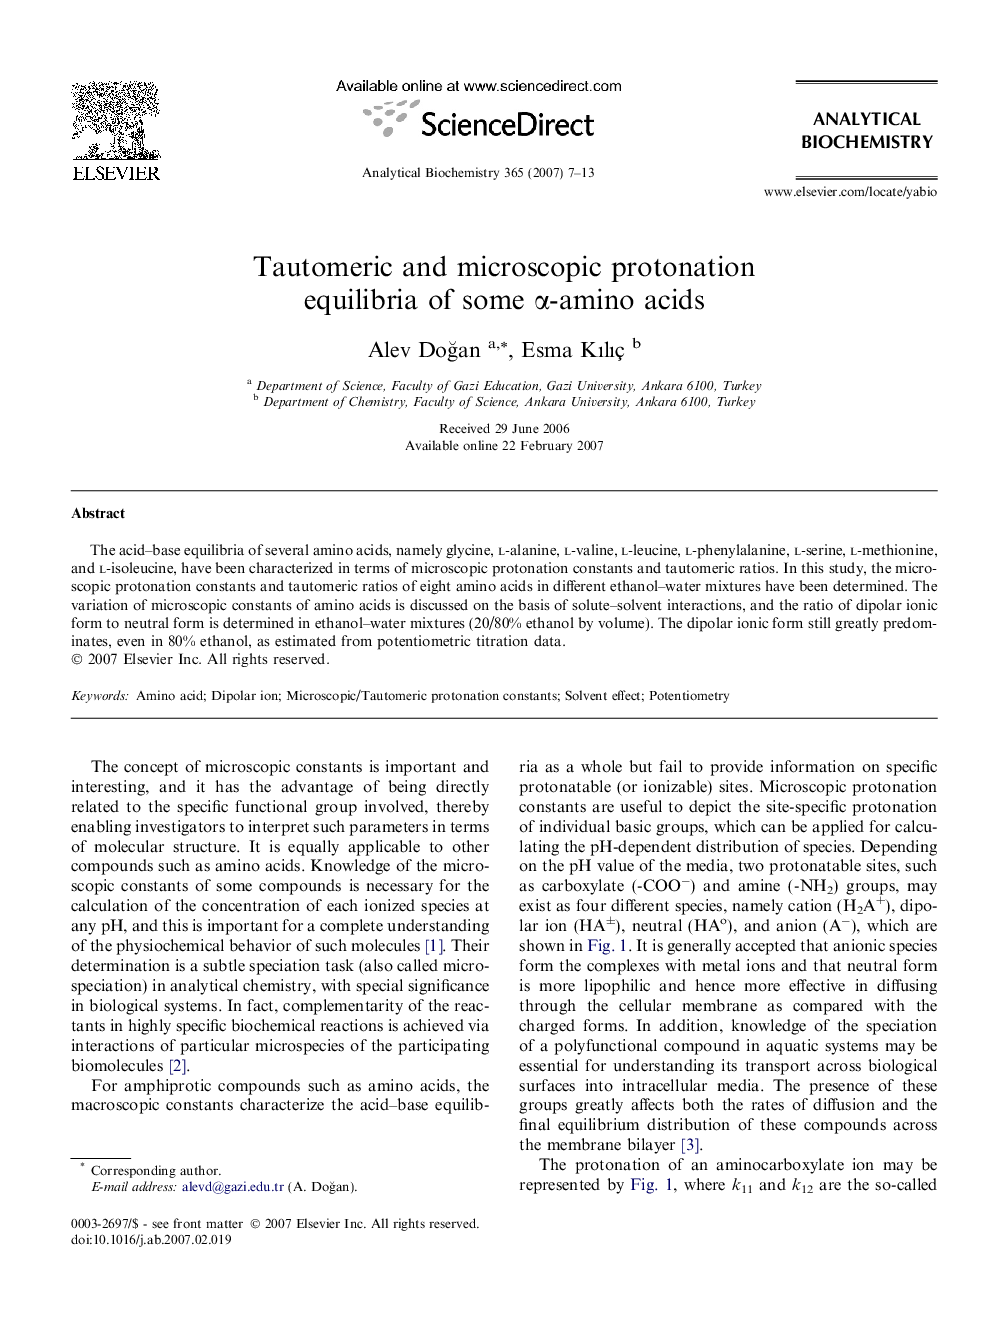 Tautomeric and microscopic protonation equilibria of some Î±-amino acids